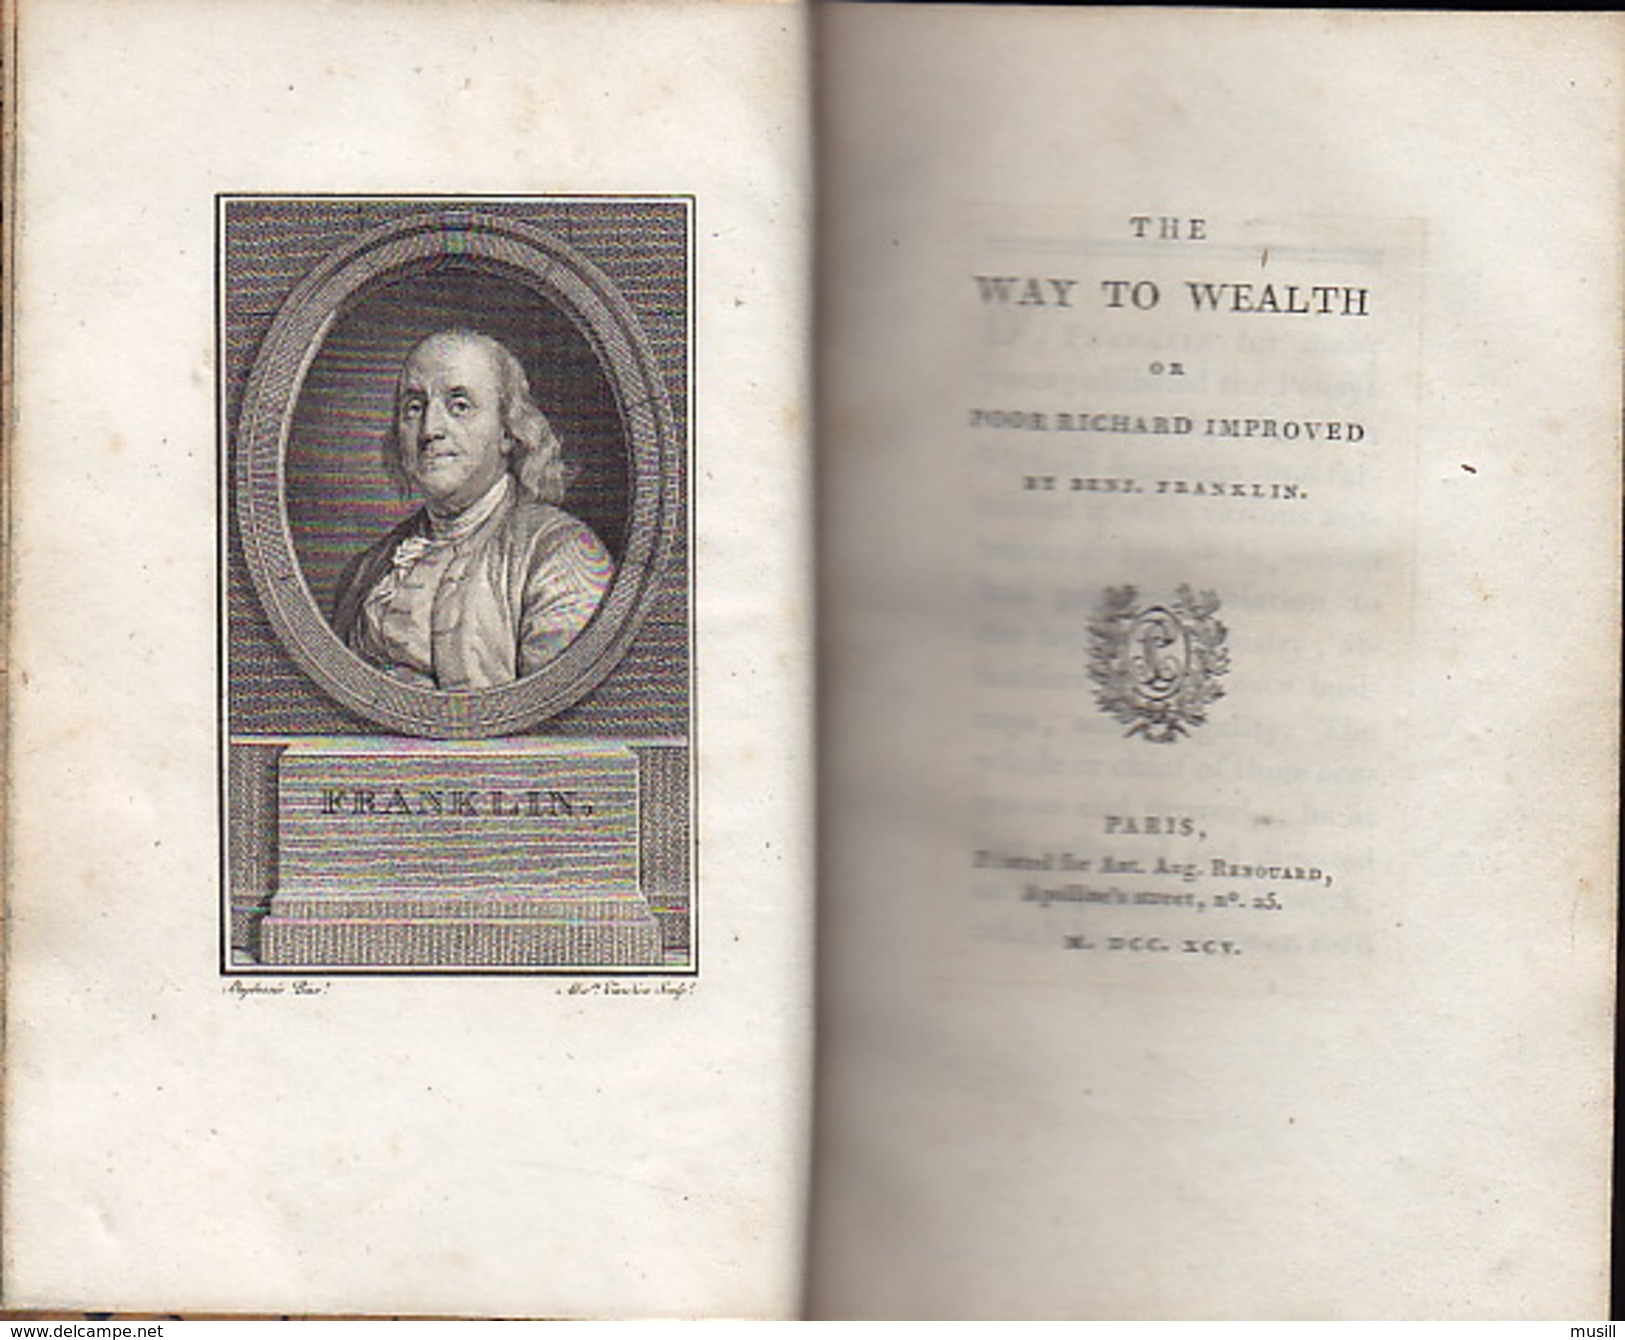 The Way To Wealth Or Poor Richard Improved De Benjamin Franklin Suivi De Sa Traduction Française. 1795 - 1700-1799